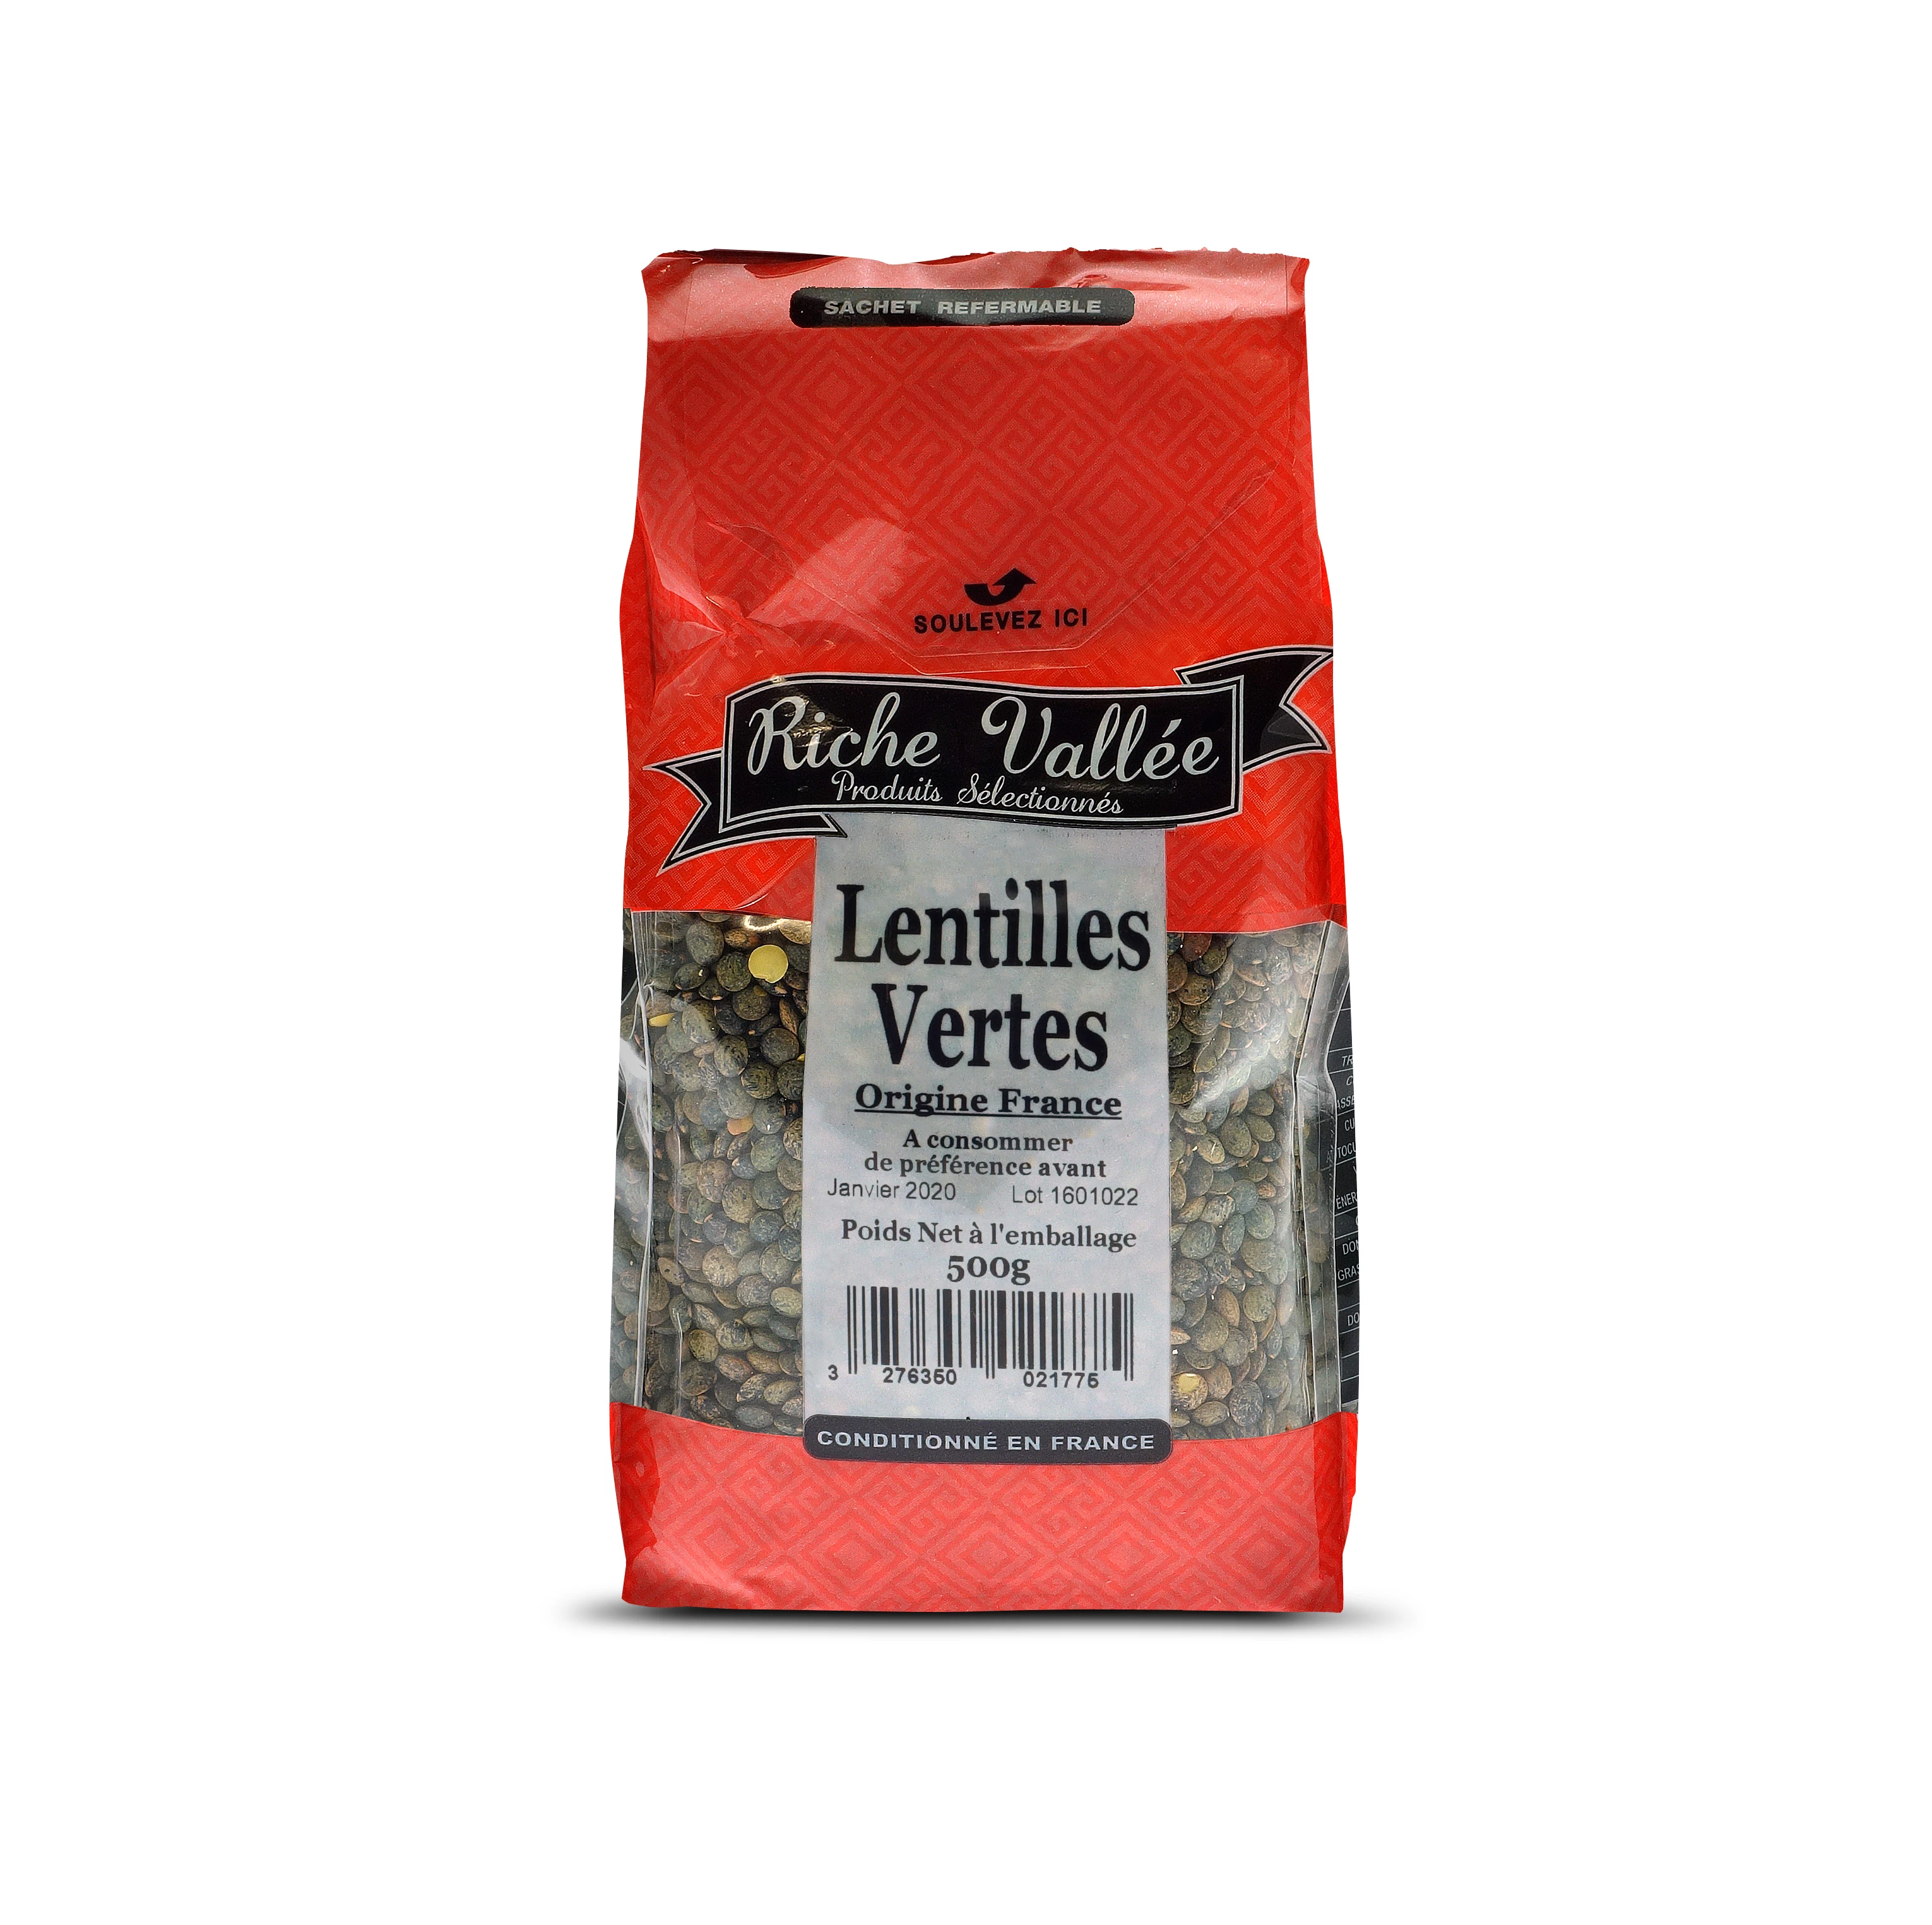 Lentilles Vertes, 500g - RICHE VALLEE